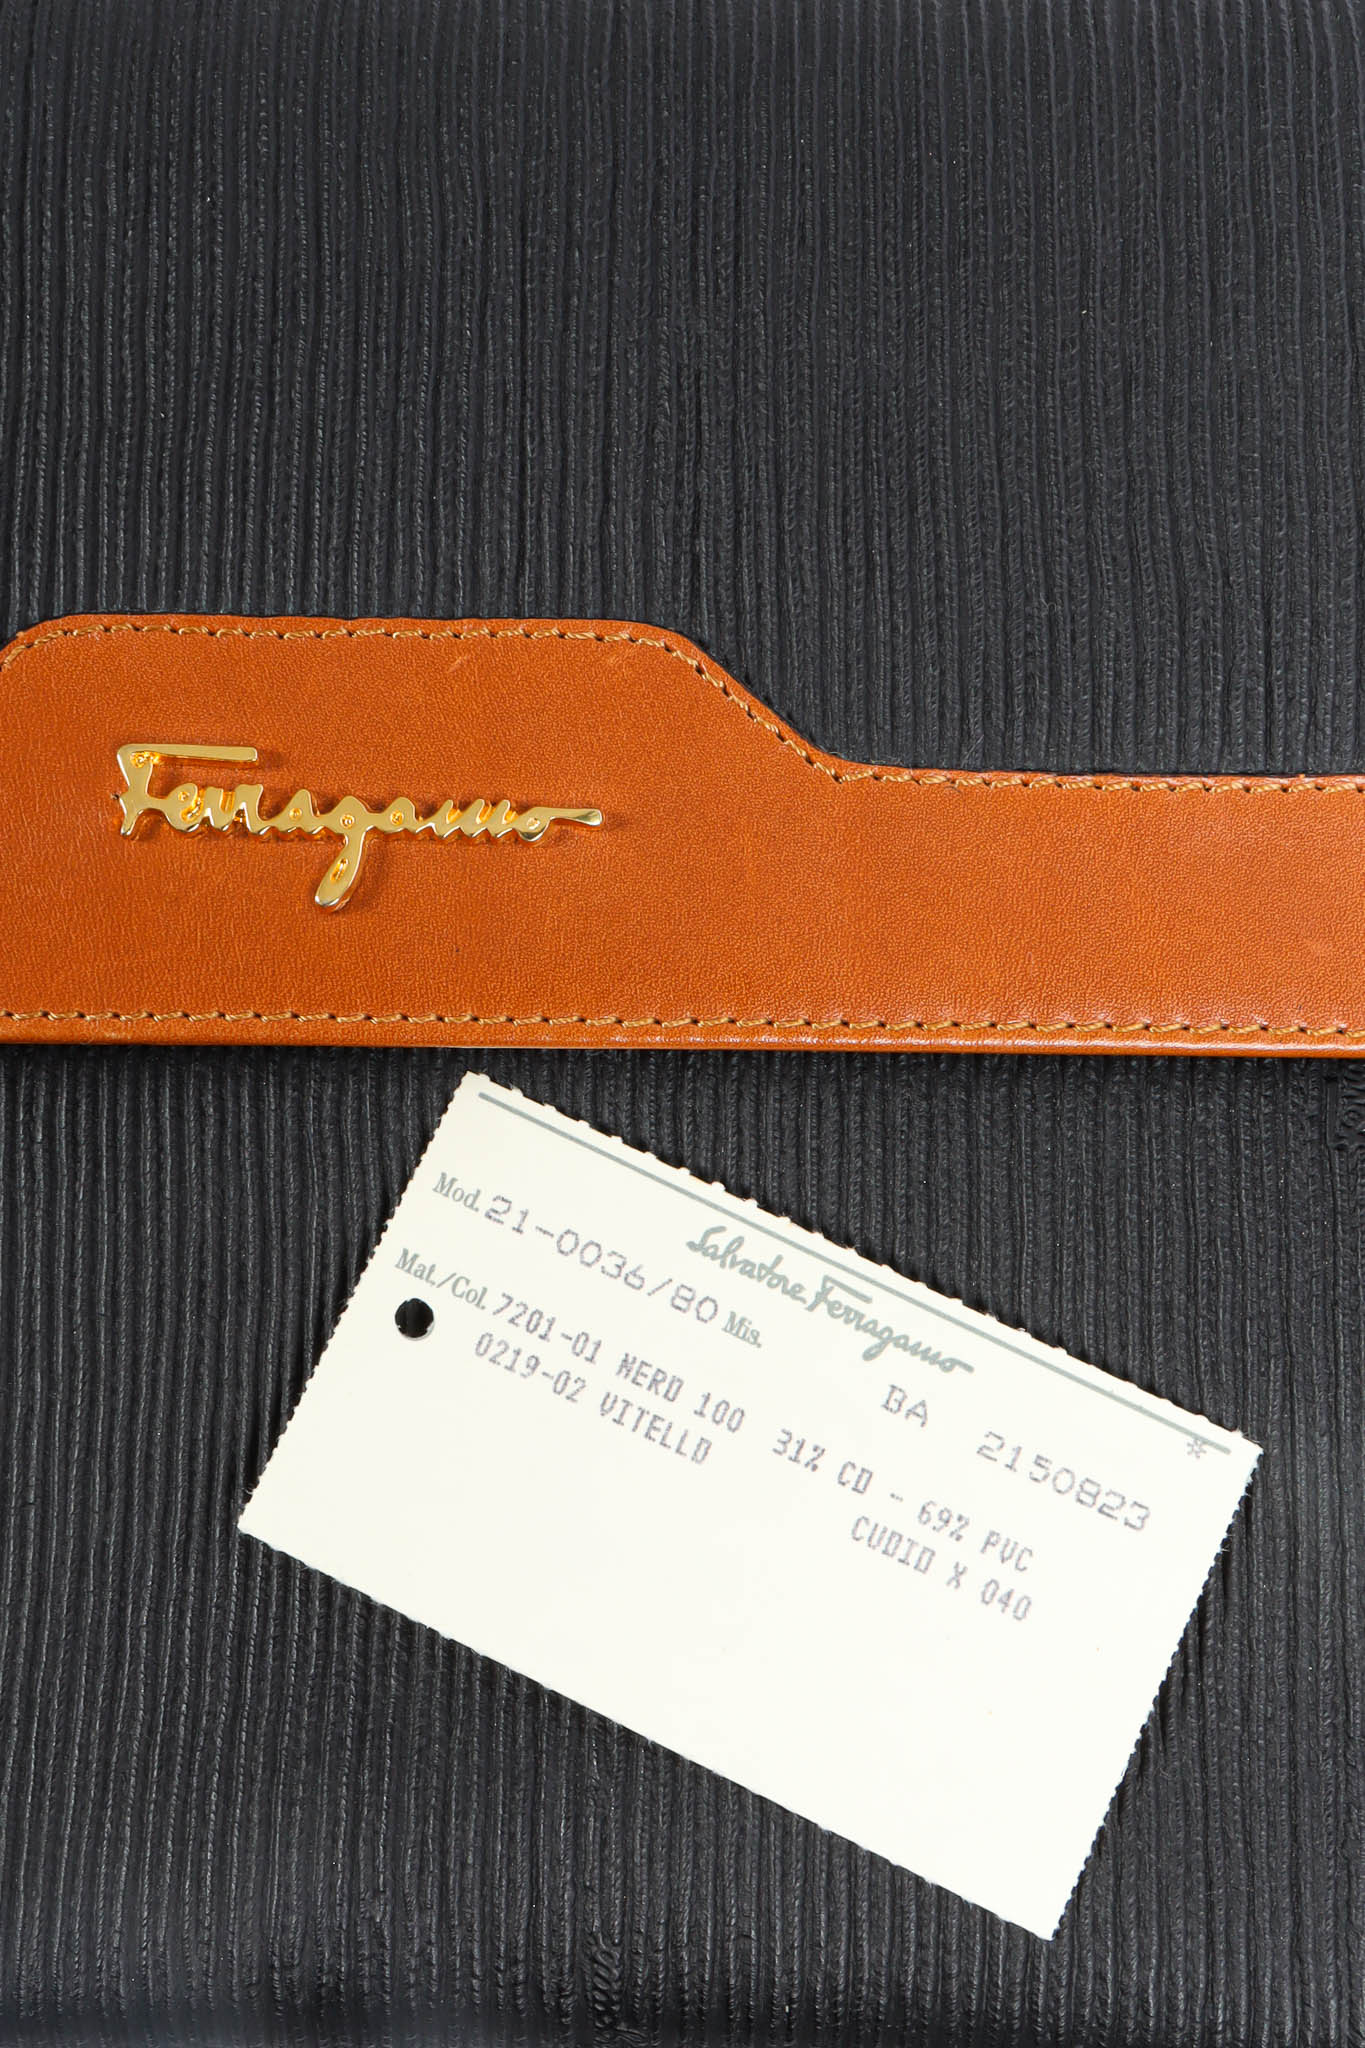 Vintage Ferragamo Leather Portfolio Clutch authenticity card @ Recess Los Angeles